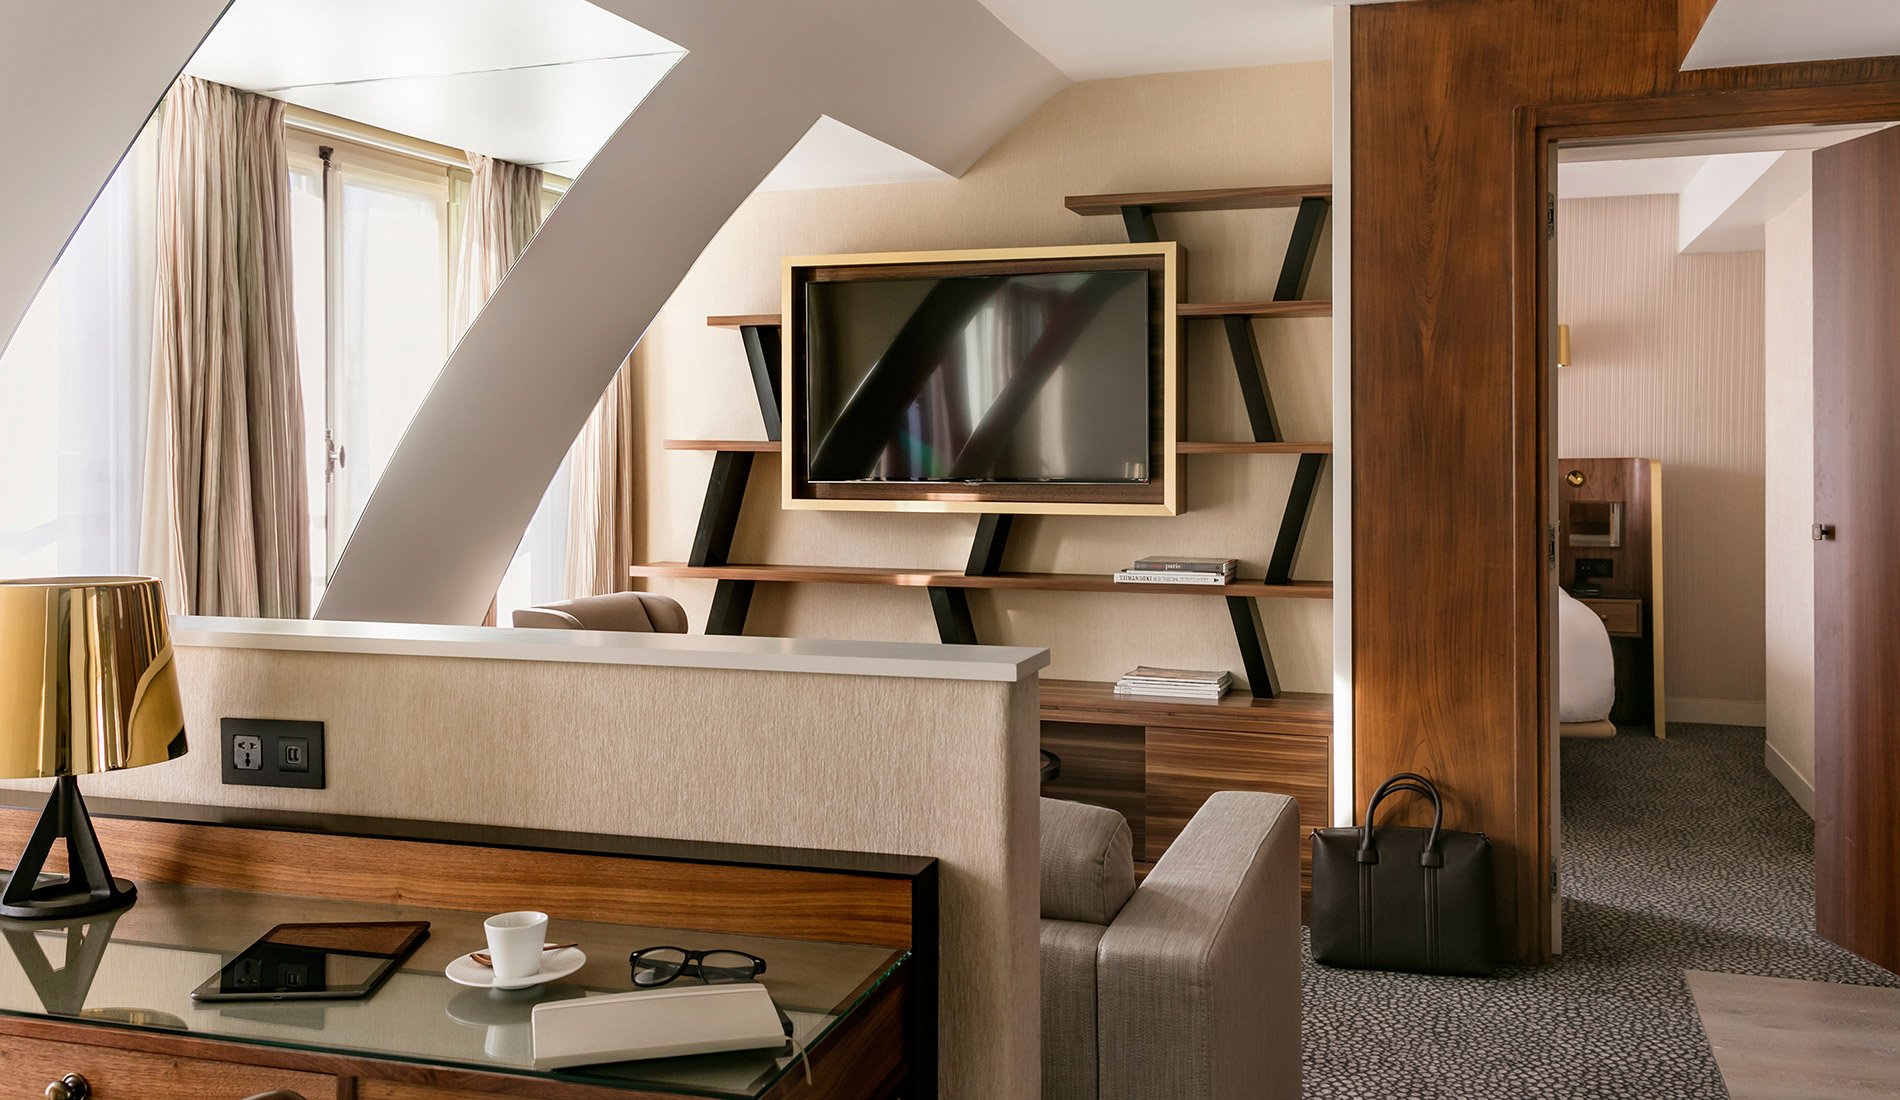 Luxury hotel - Maison Albar Hotels Le Pont-Neuf - 5-star - suite